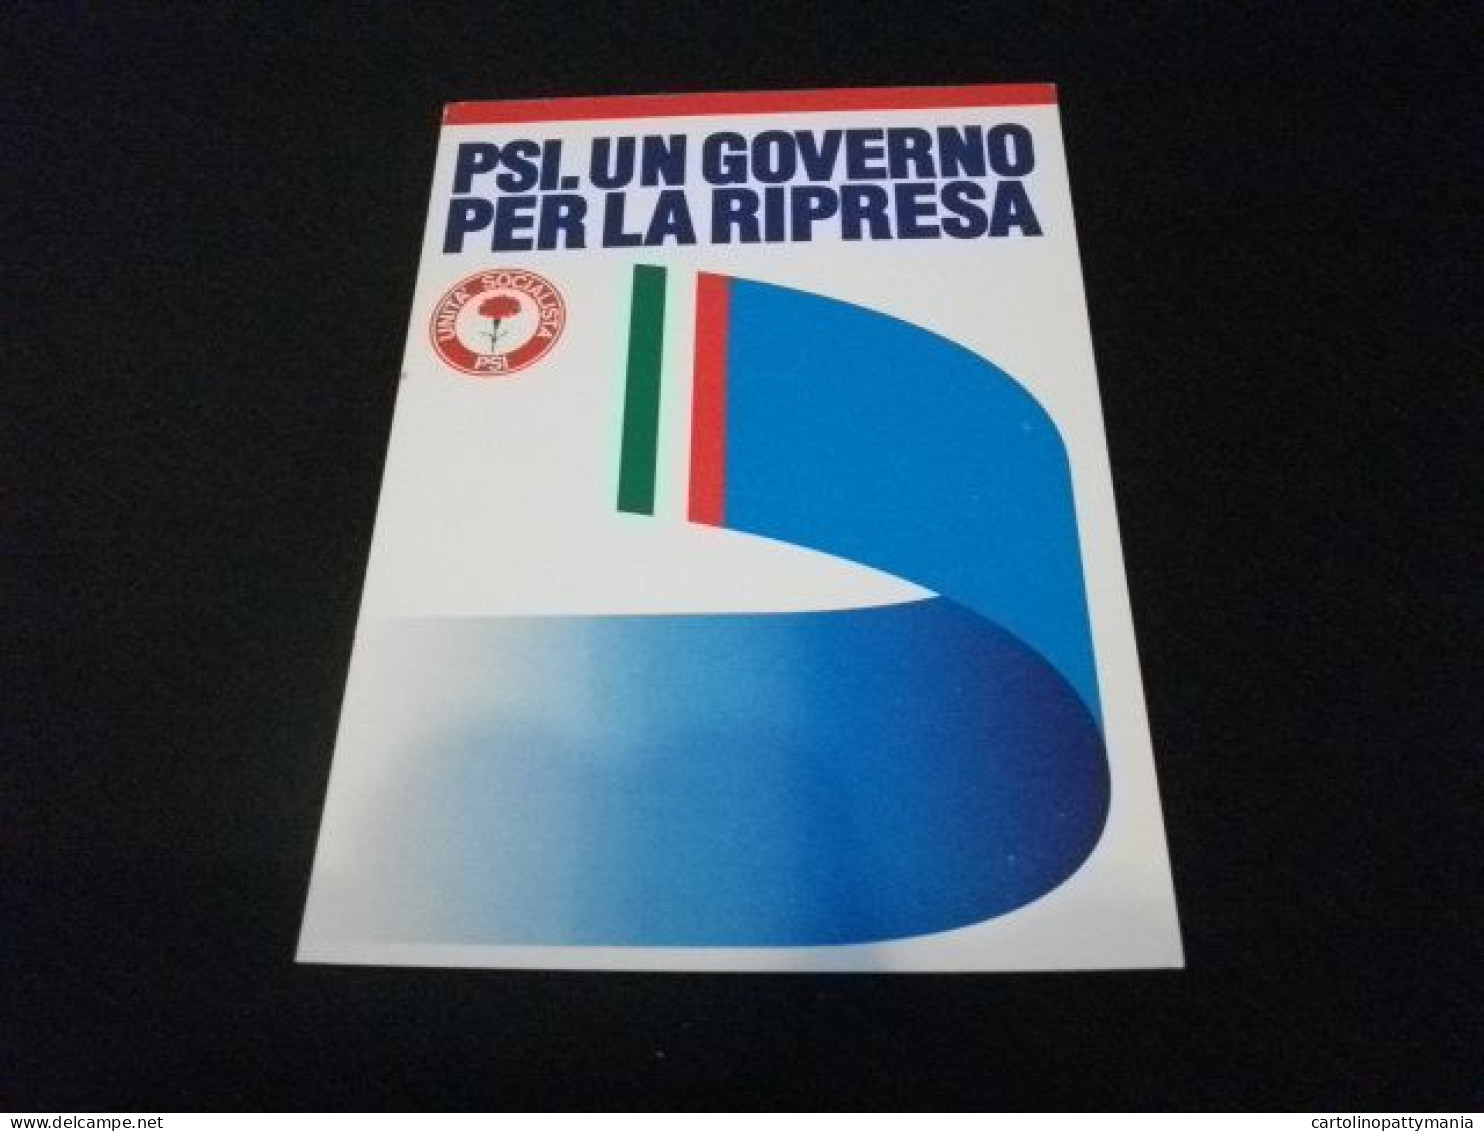 PSI UN GOVERNO PER LA RIPRESA UNITA' SOCIALISTA PARTITO SOCIALISTA ITALIANO - Political Parties & Elections